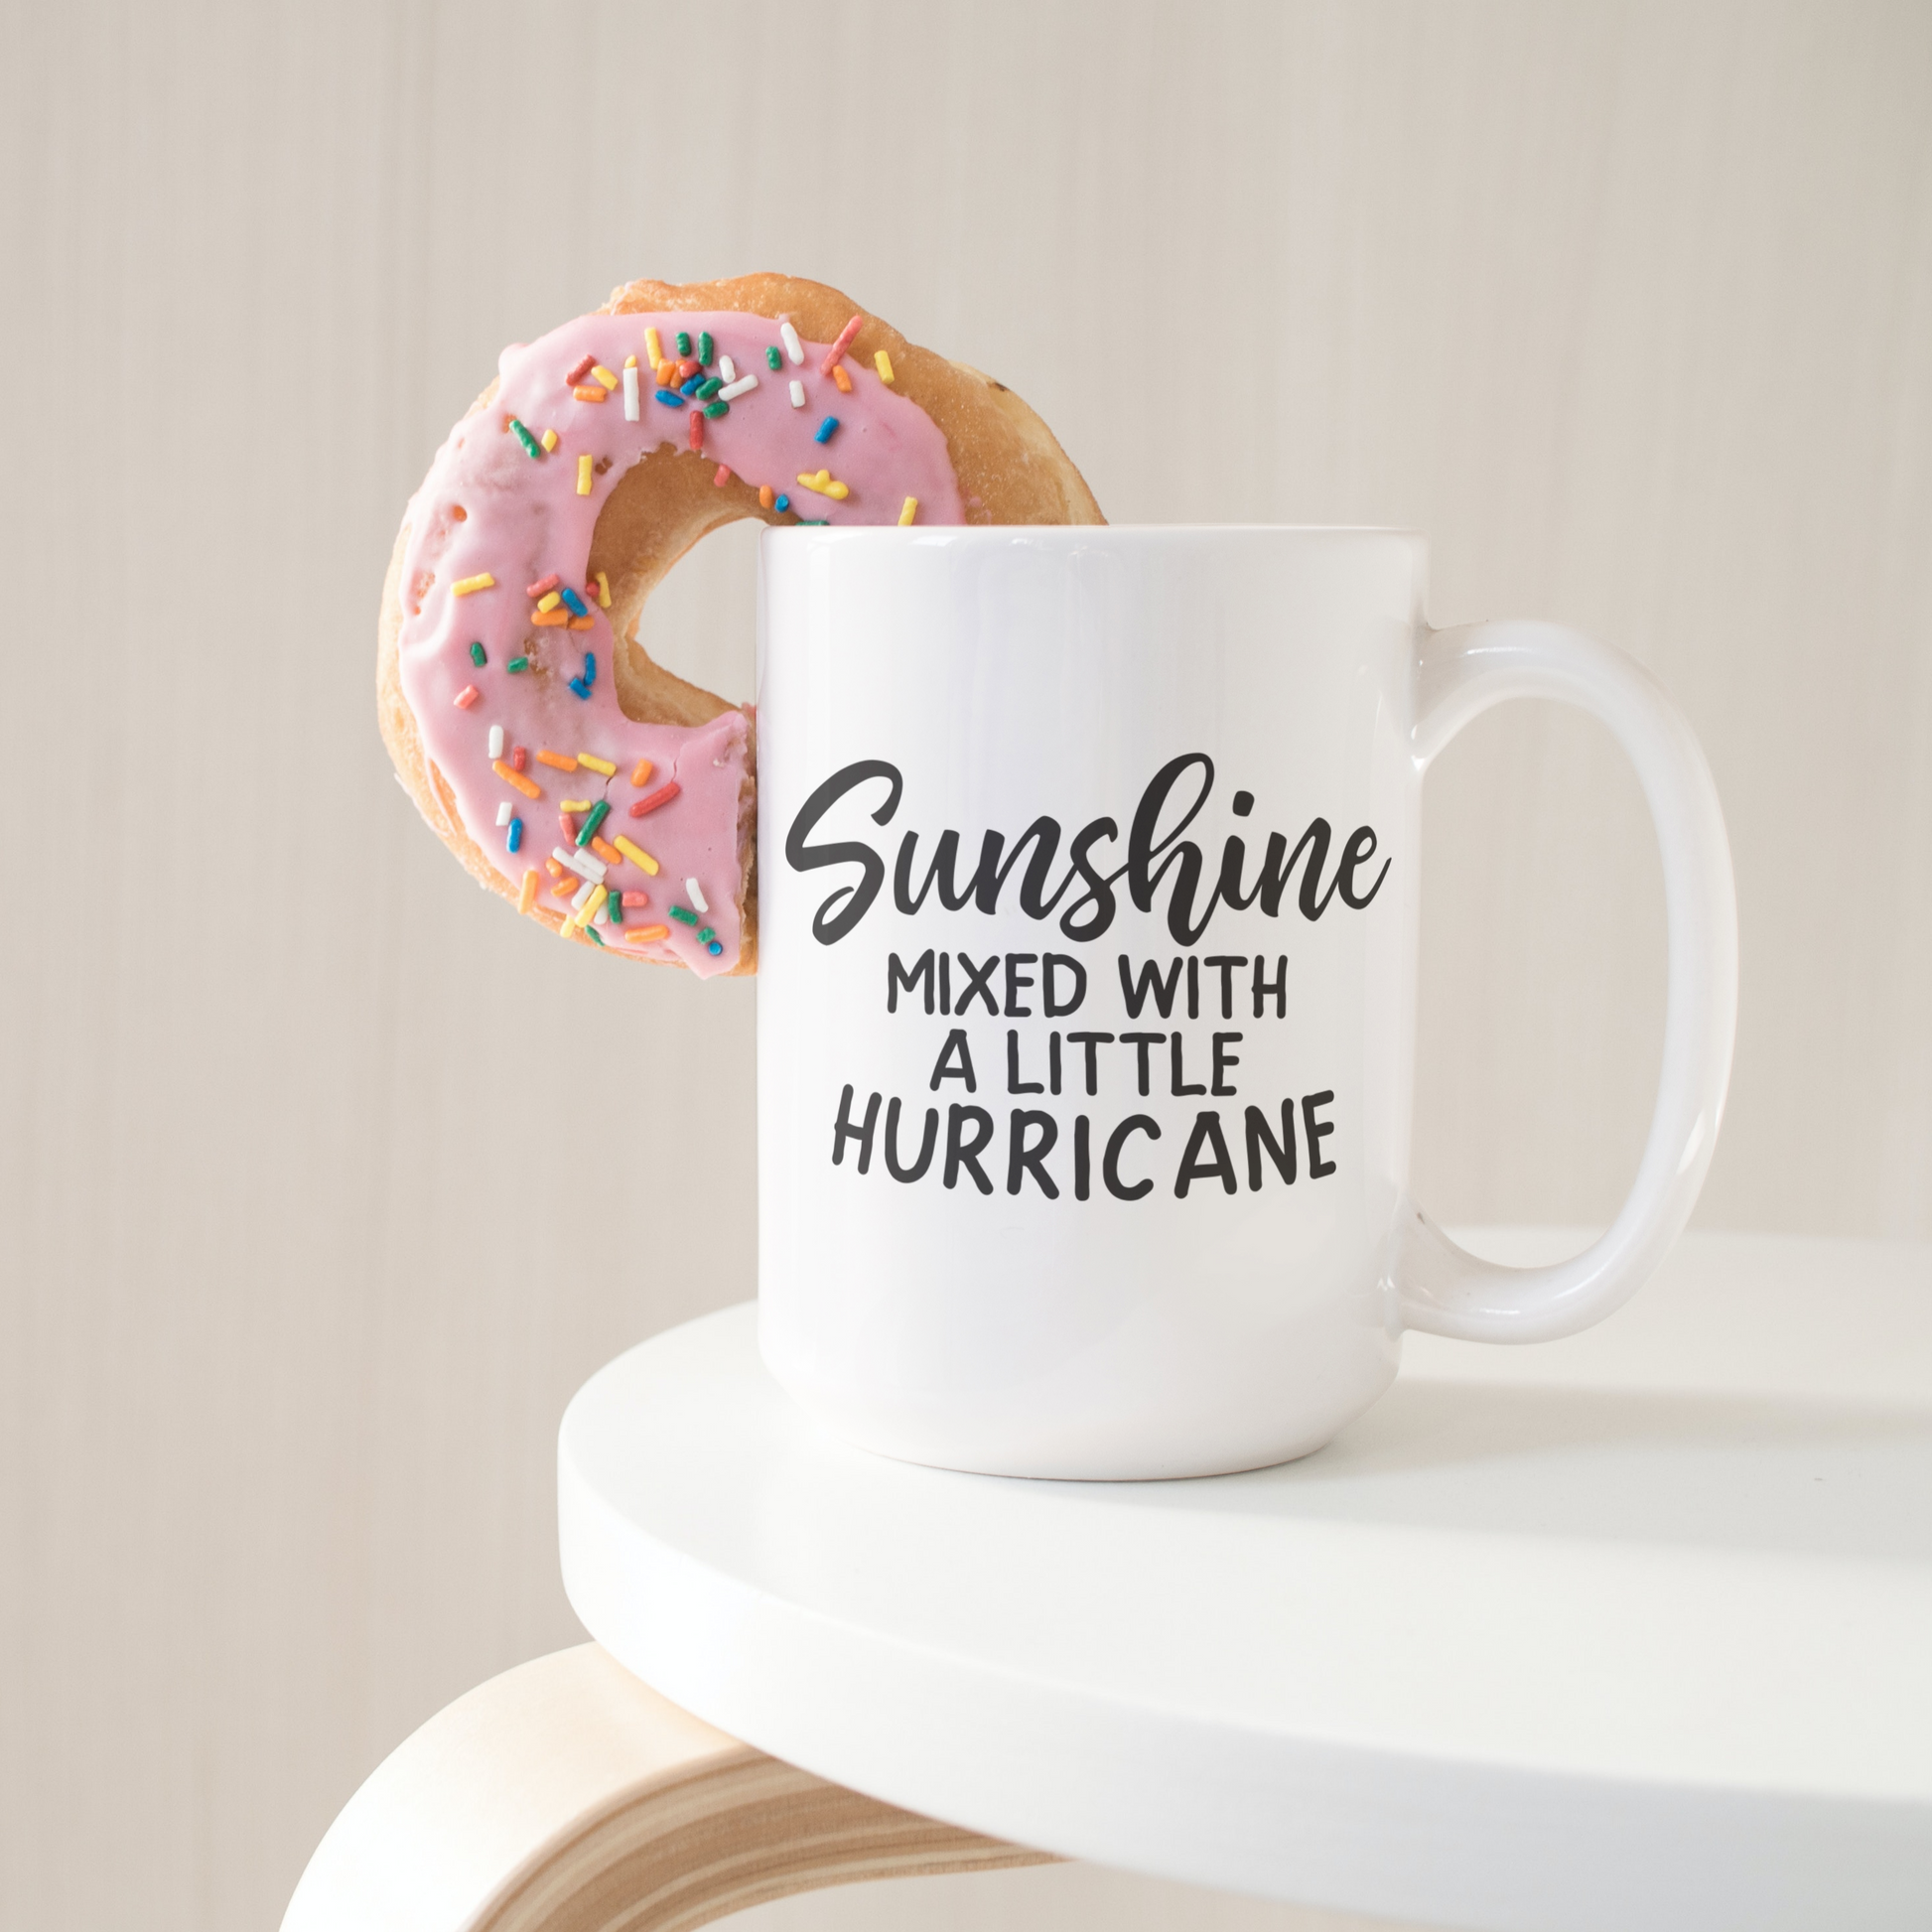 Sunshine Mixed With a little Hurricane 15 oz mug